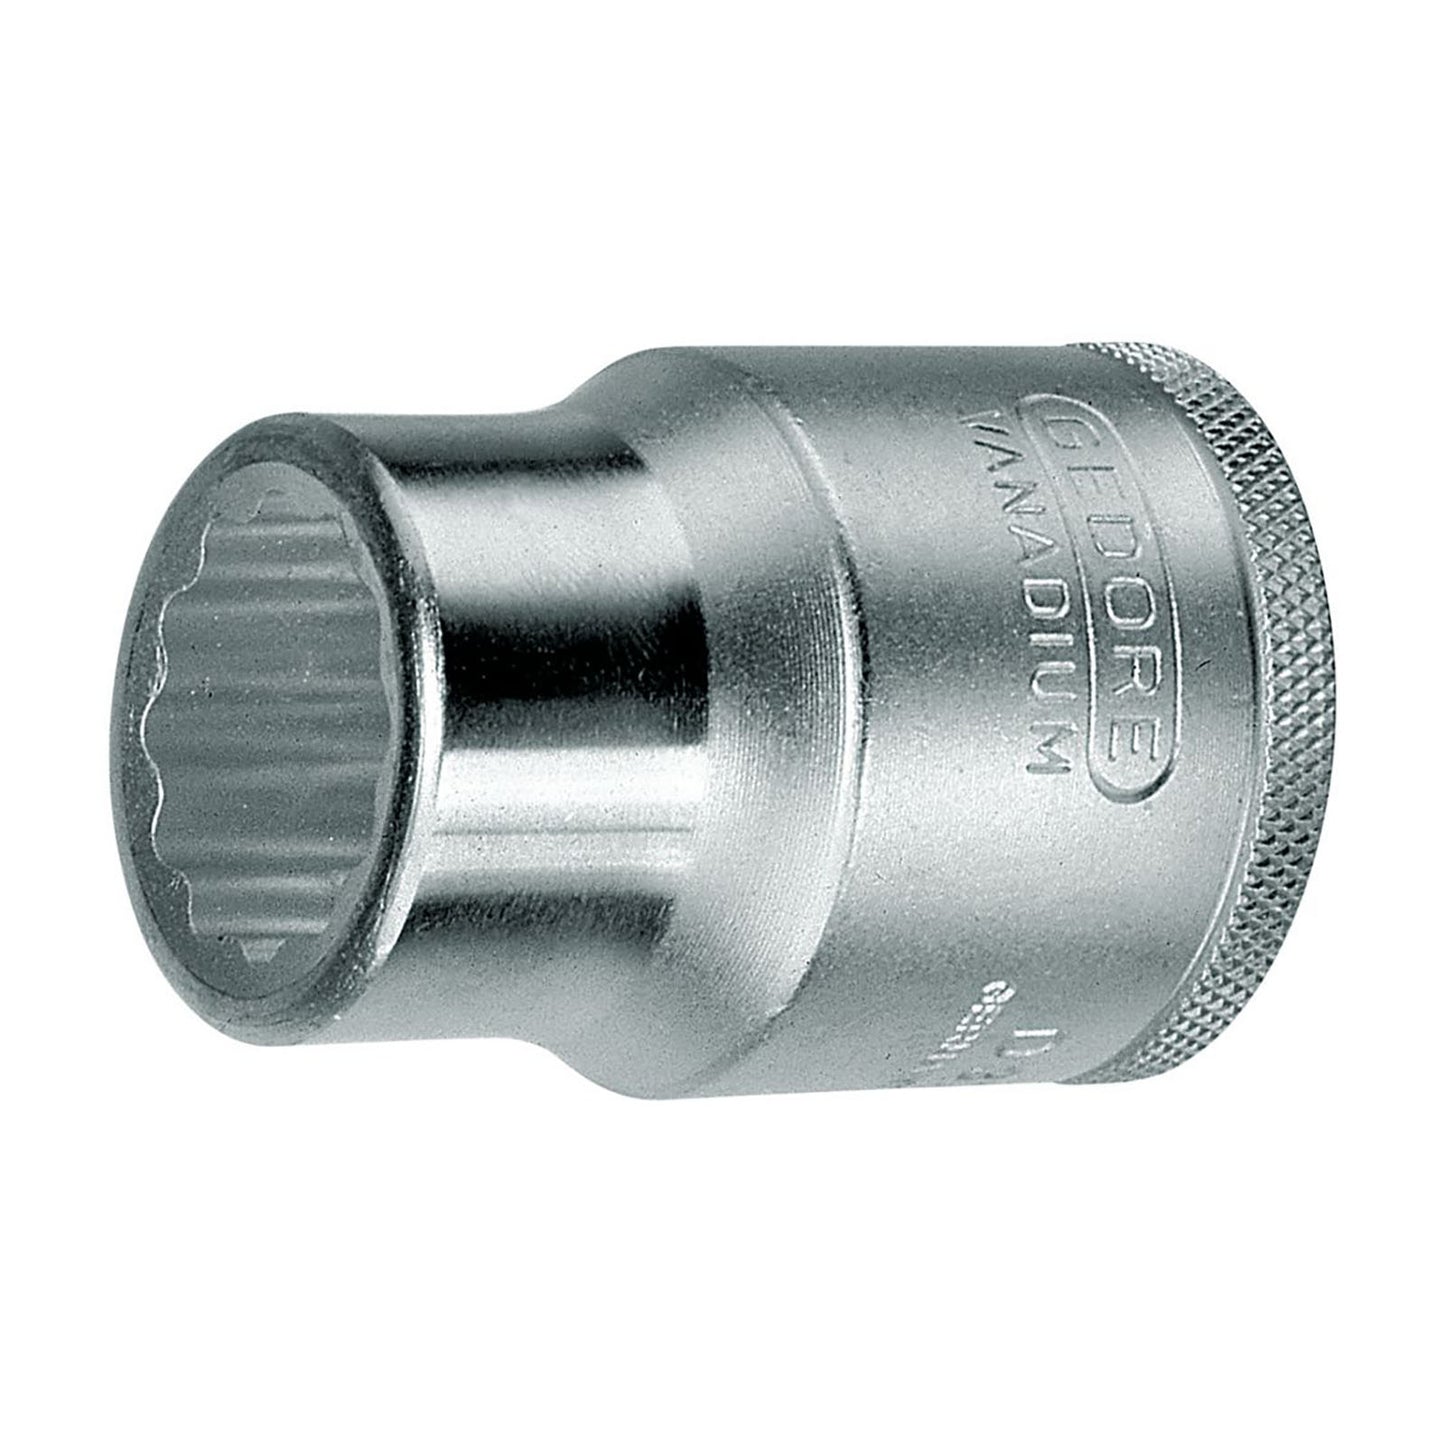 GEDORE D 32 41 - Unit Drive Socket 3/4", 41 mm (6273050)